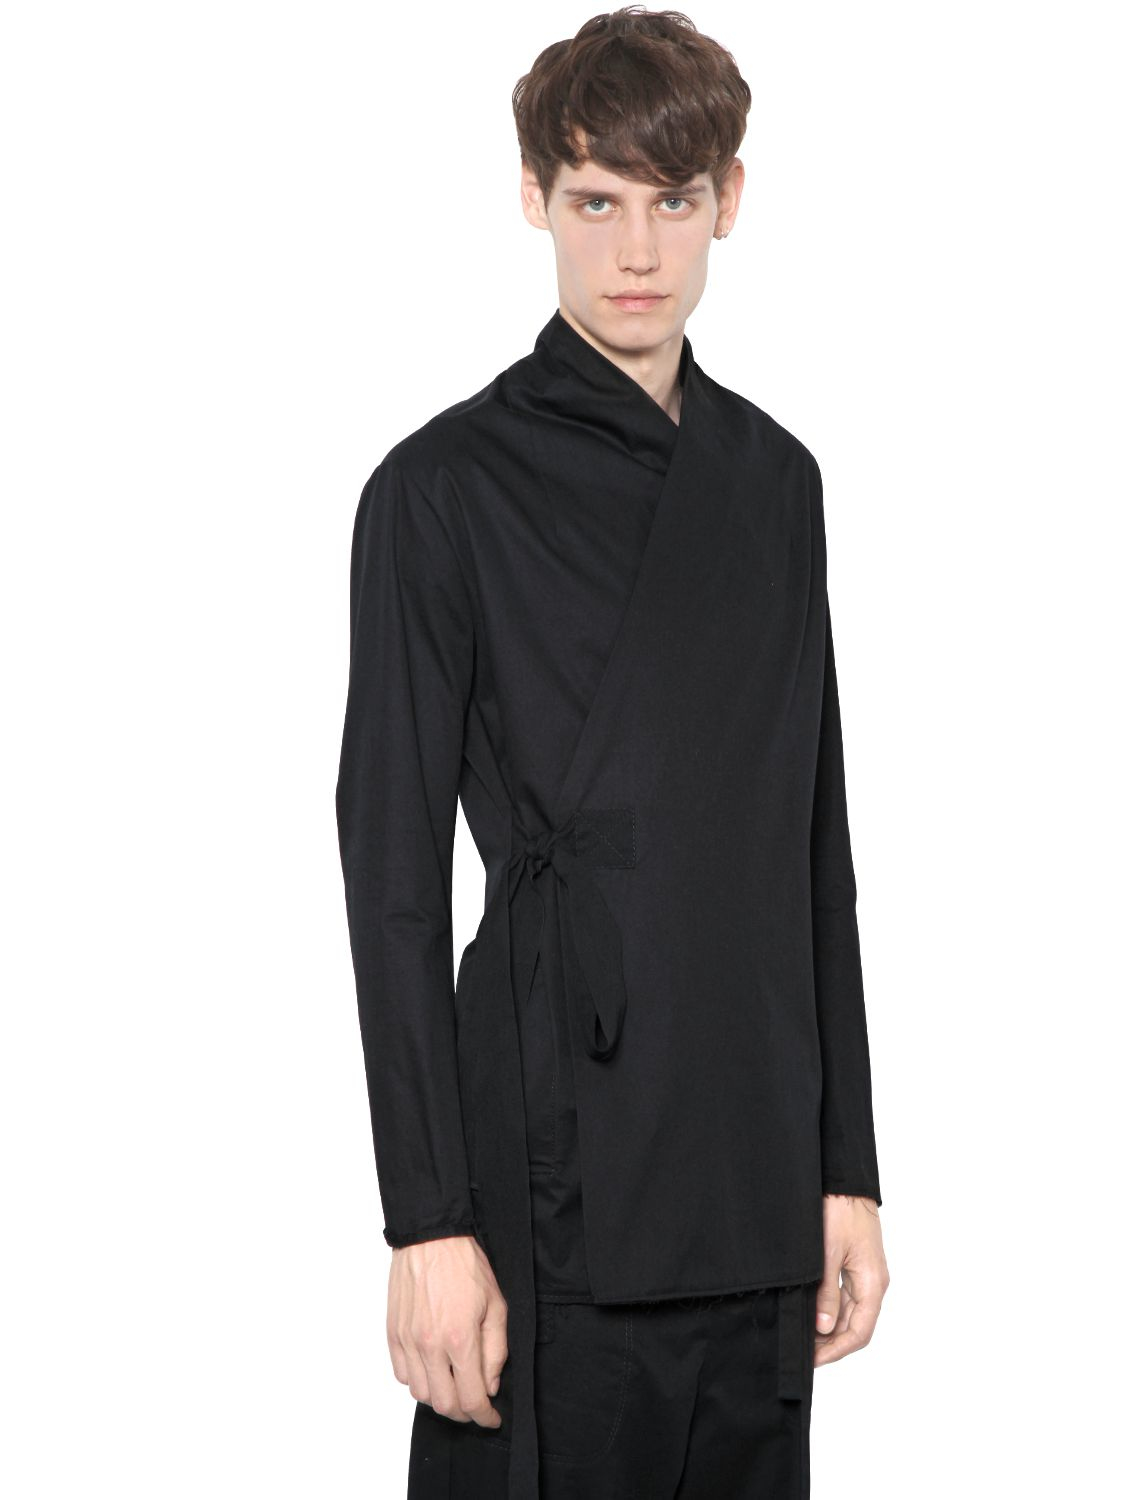 Damir Doma Cotton Poplin Kimono Shirt in Black for Men - Lyst